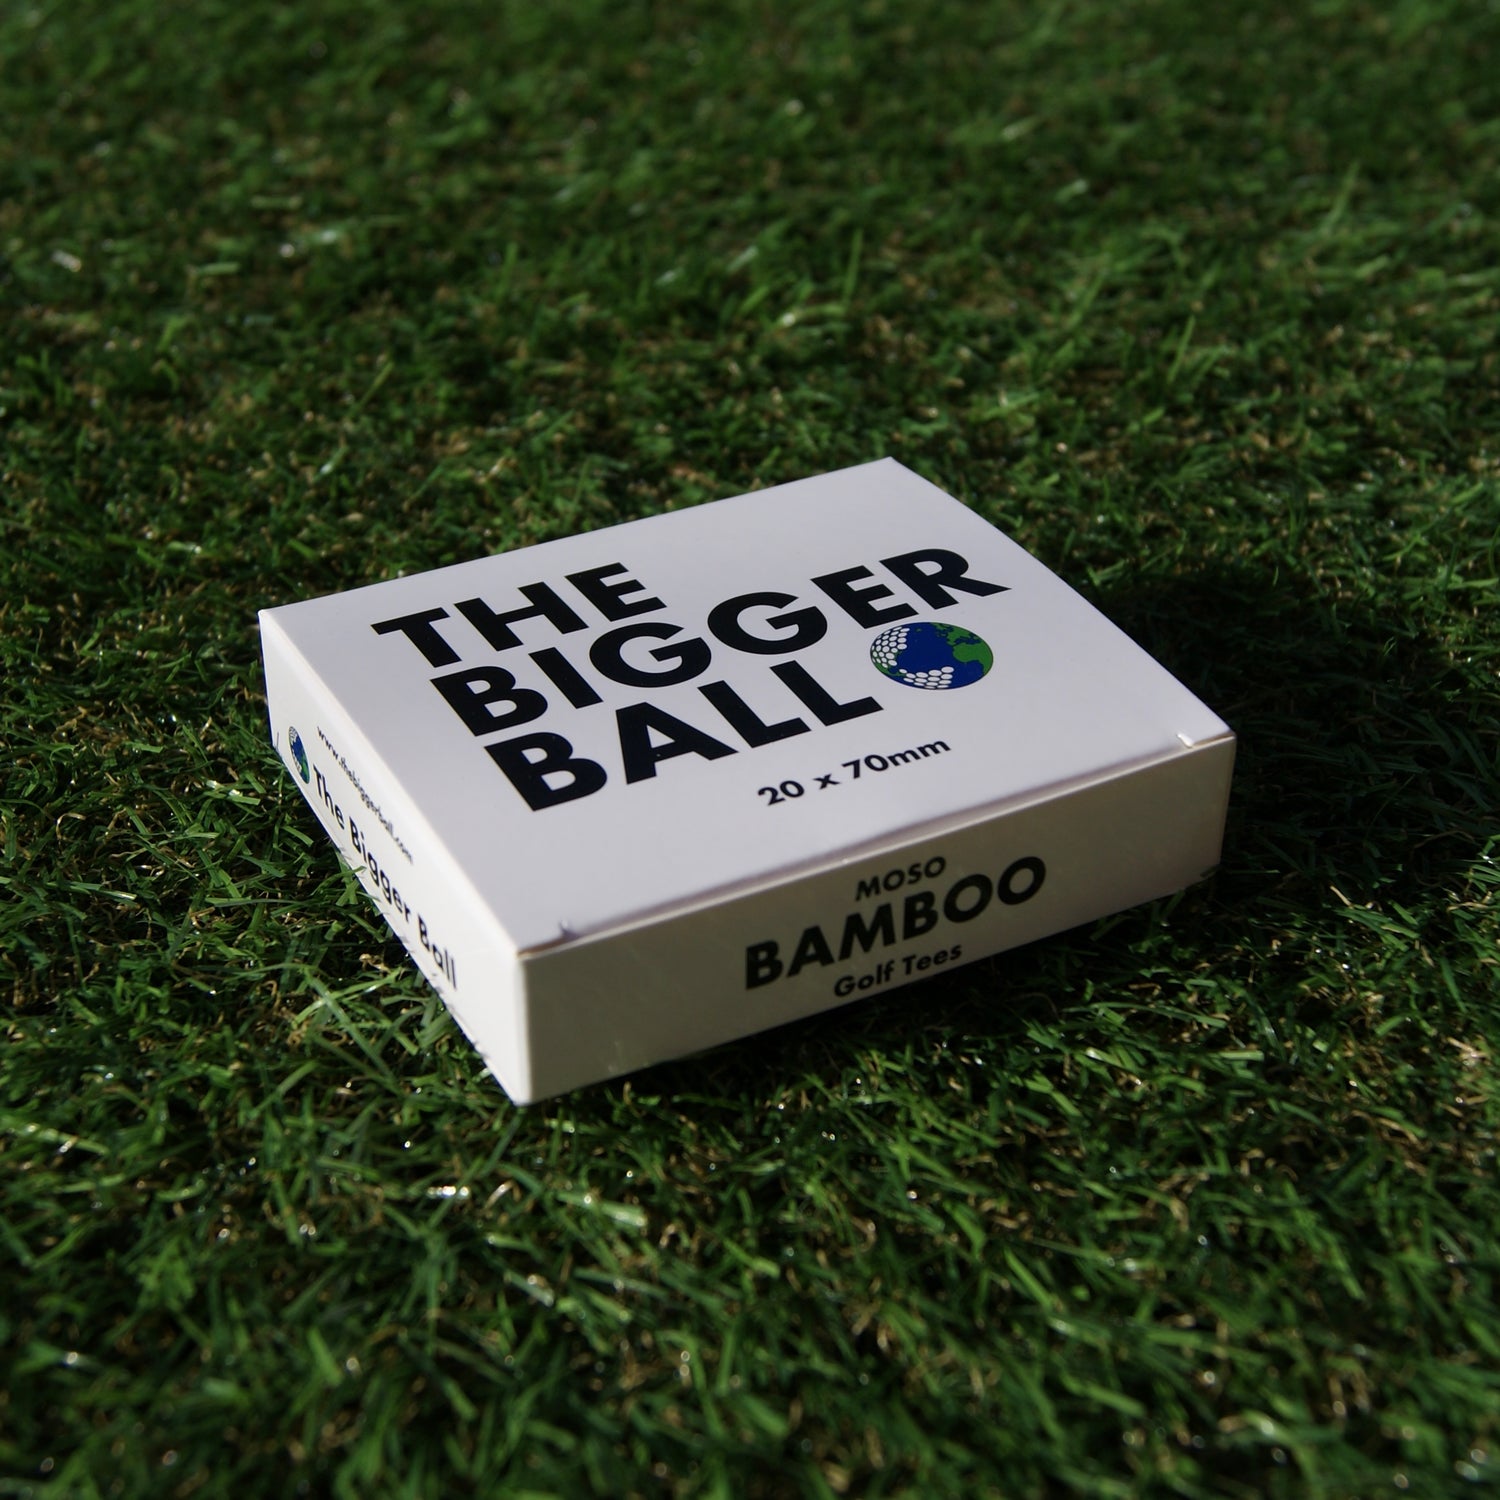 The Bigger Ball 70mm Bamboo Golf Tees